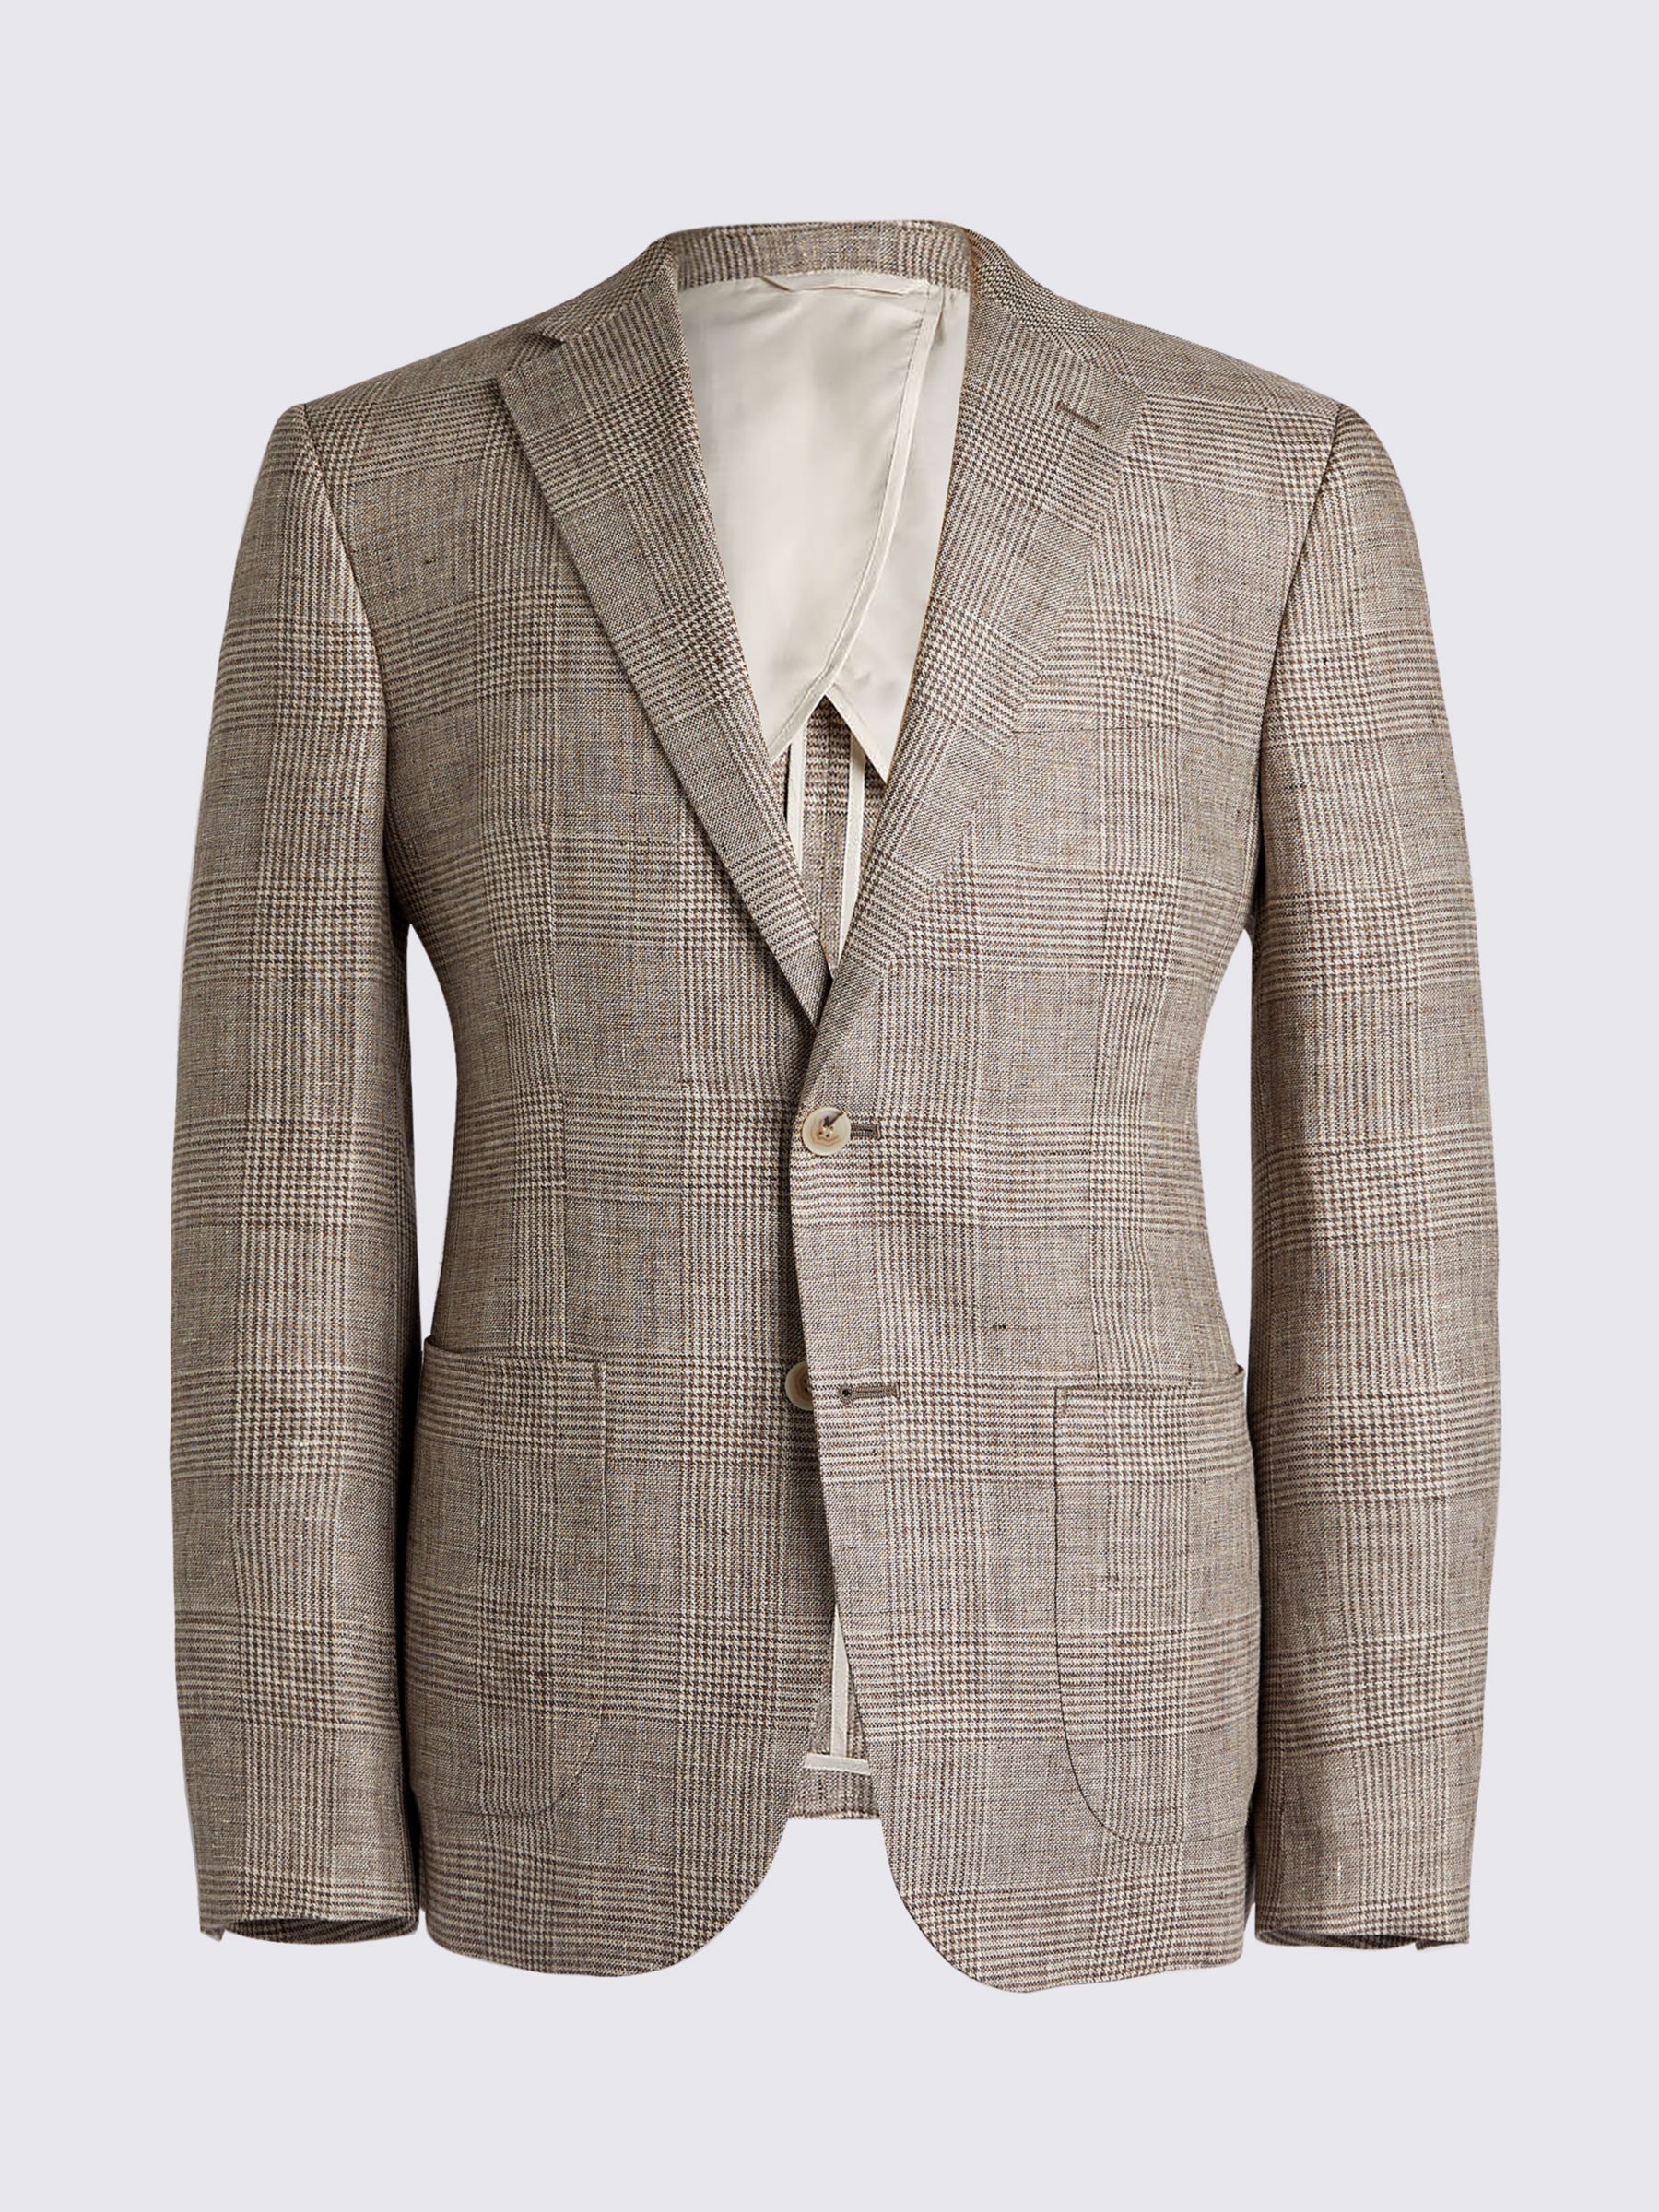 Moss Slim Fit Check Linen Suit Jacket, Brown, 48R